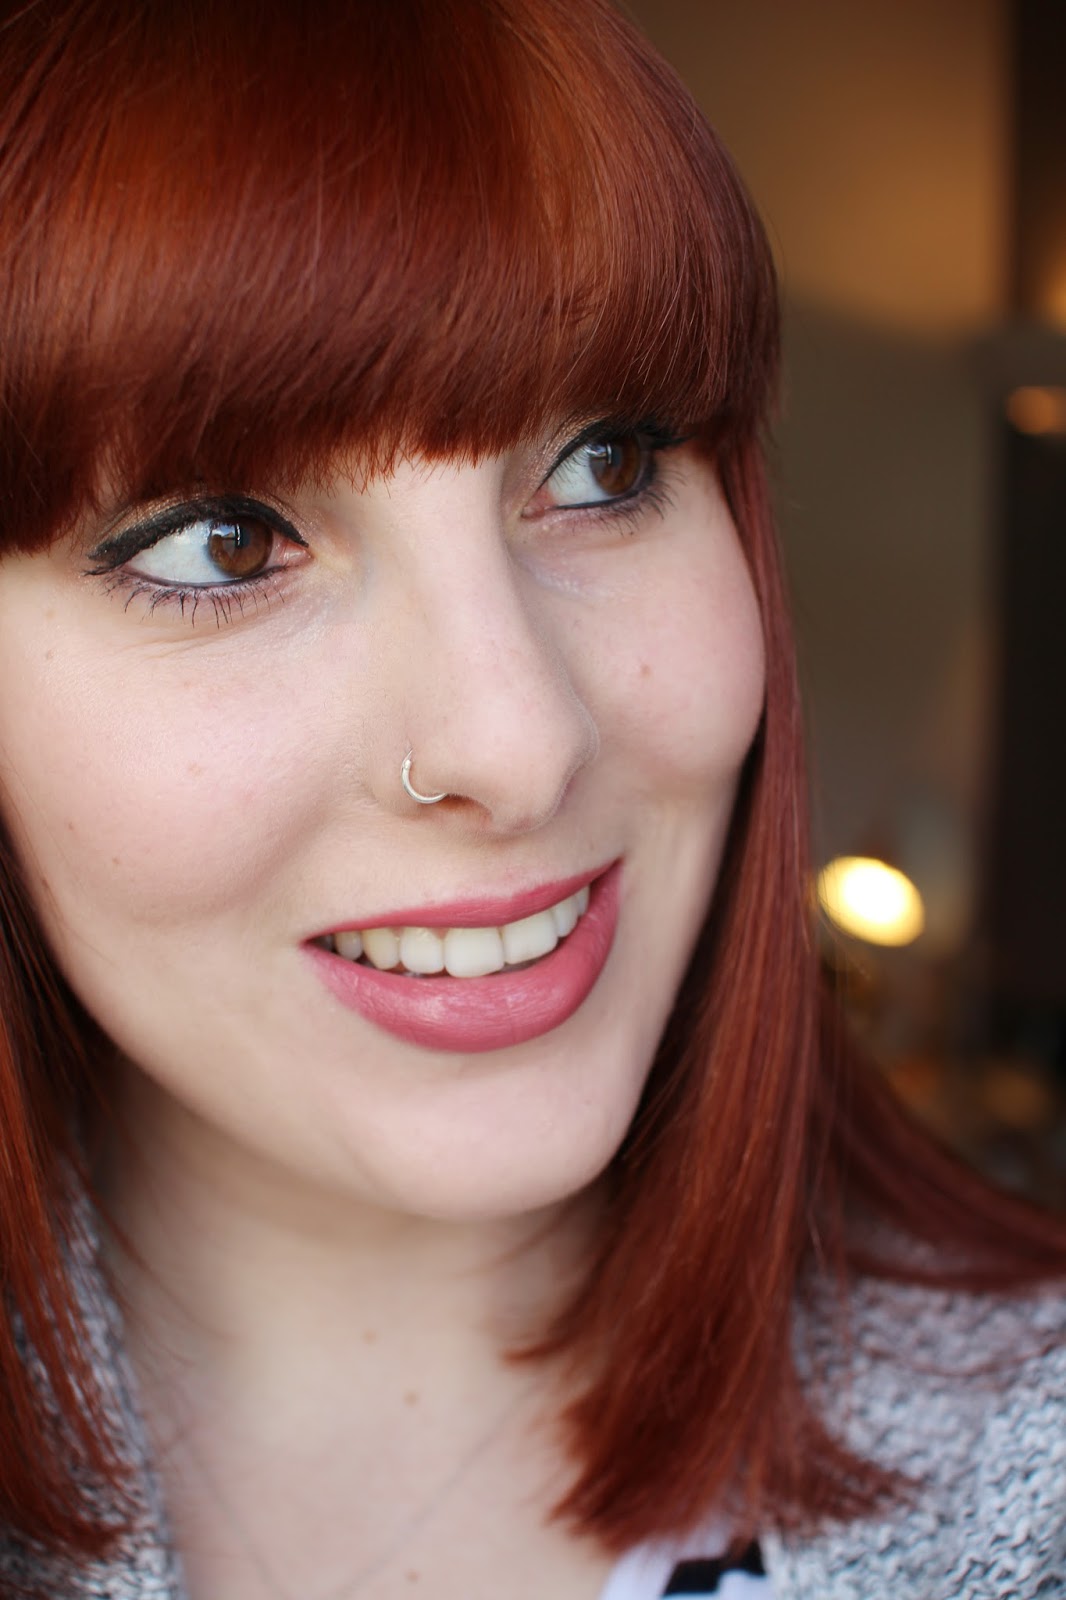 mac lipstick shades for redheads